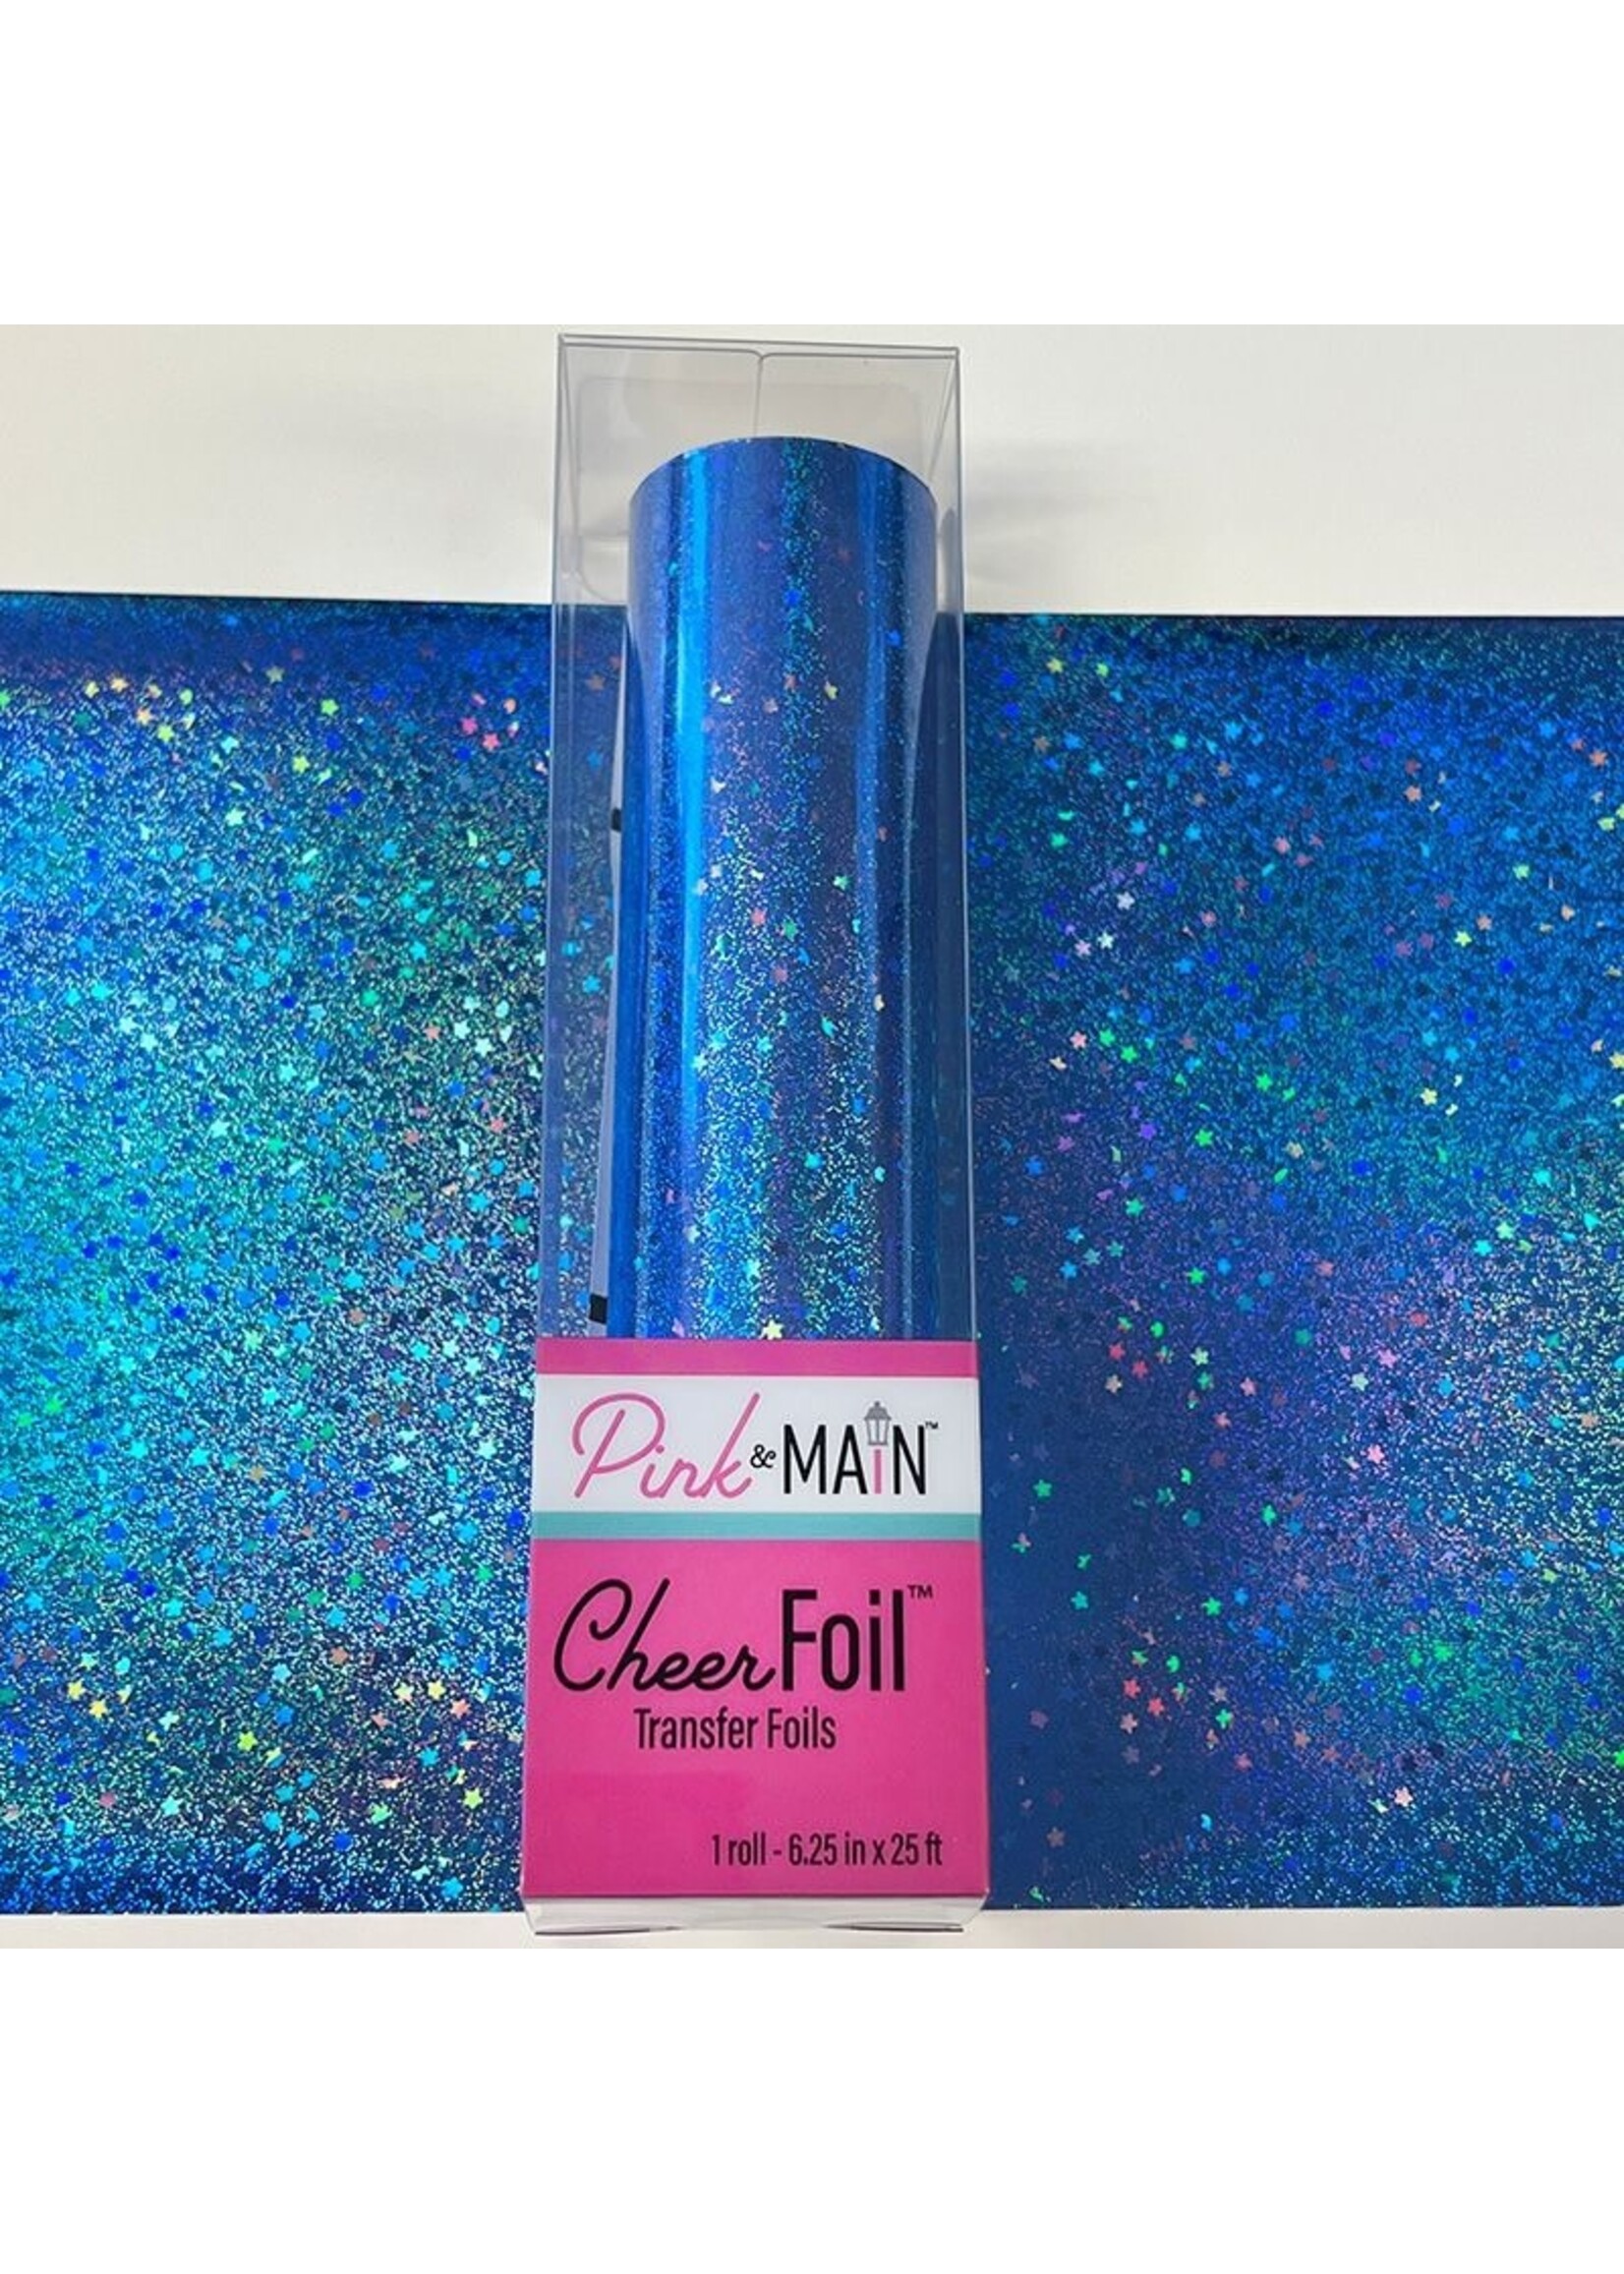 Pink & Main Cheer Foil Transfer Foil, Sparkle Blue